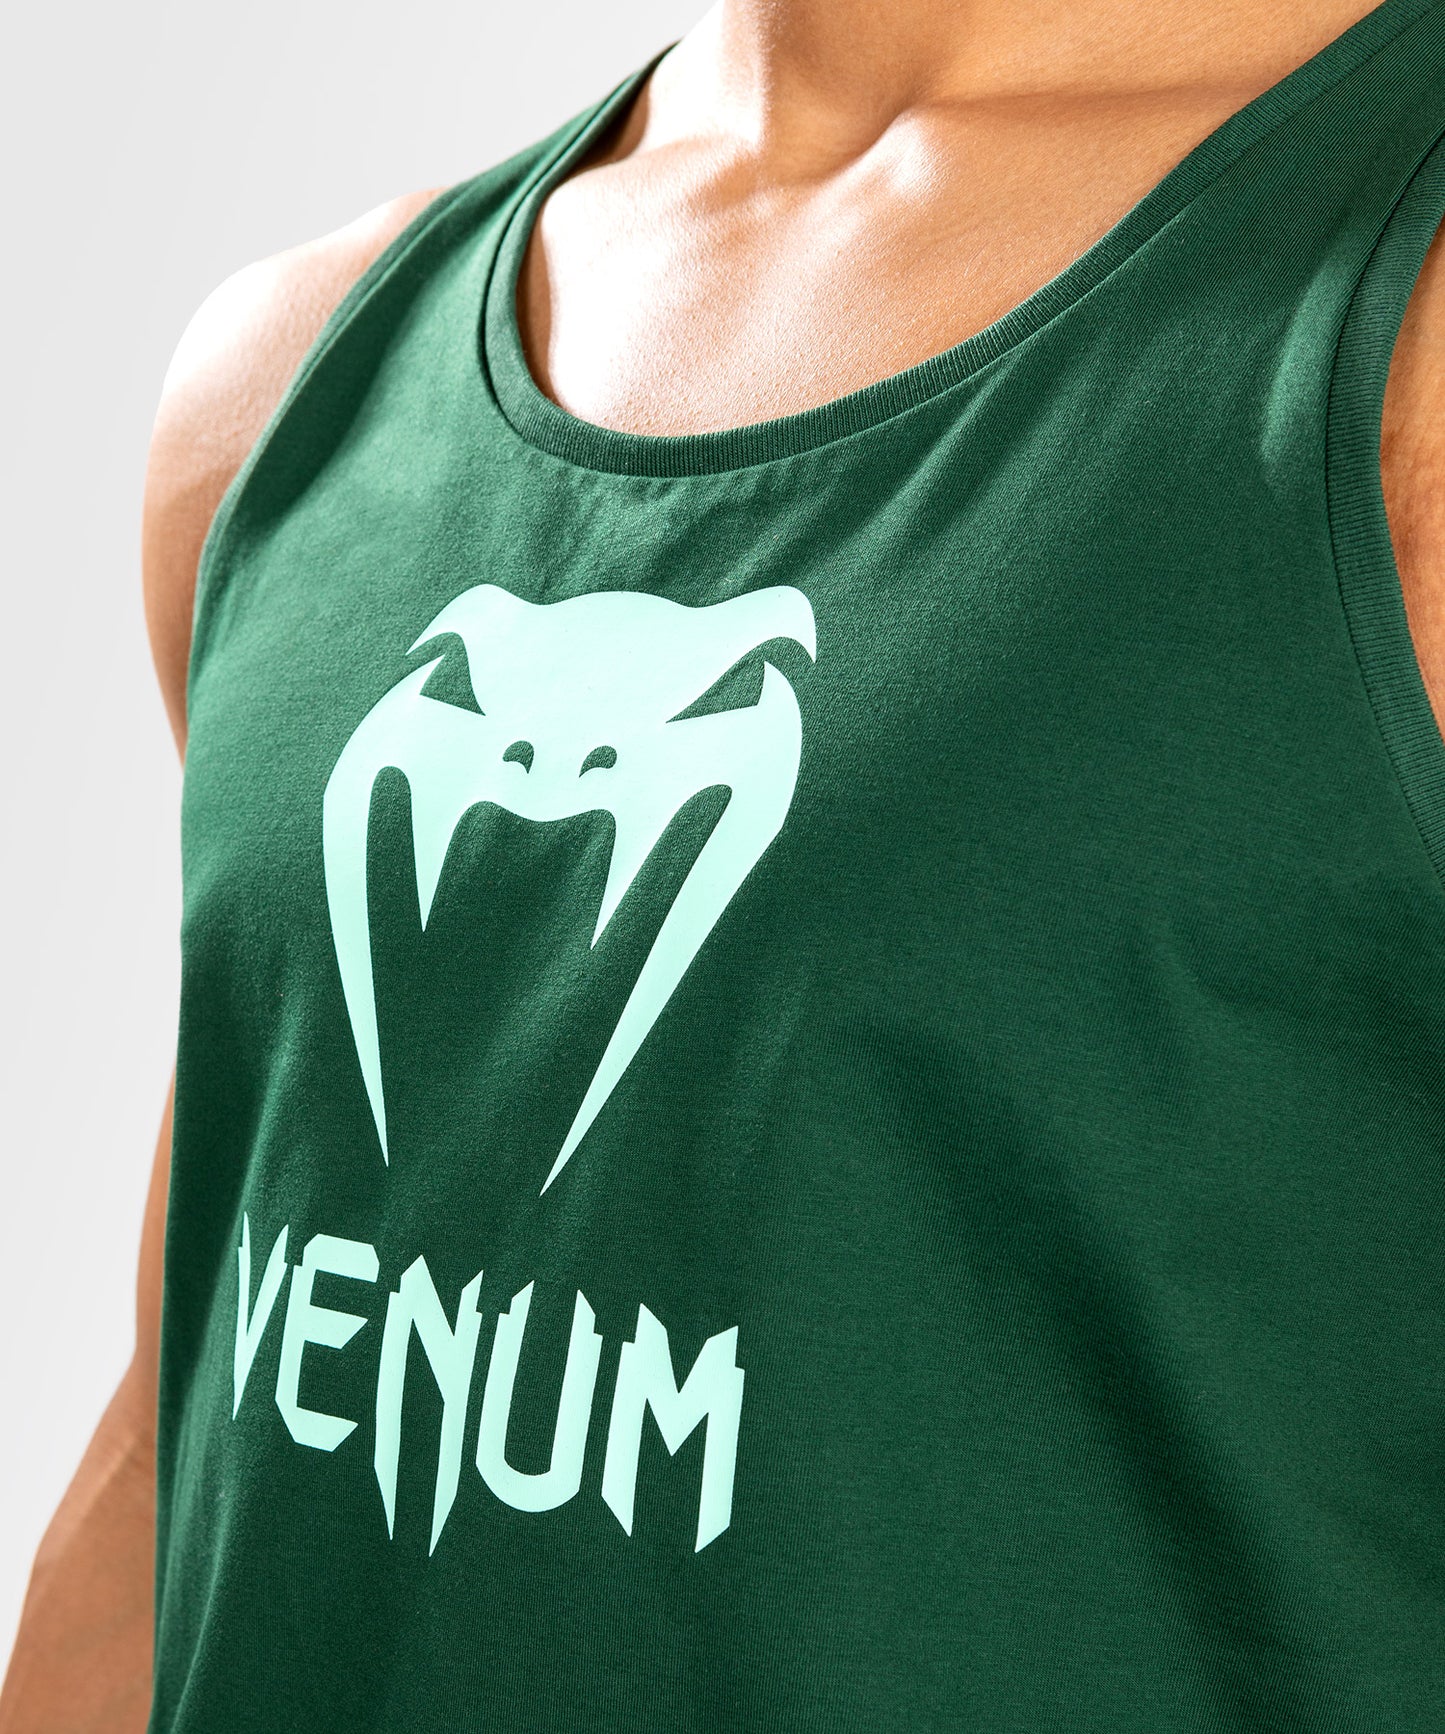 Venum Classic Tank Top - Dark Green/Turquoise